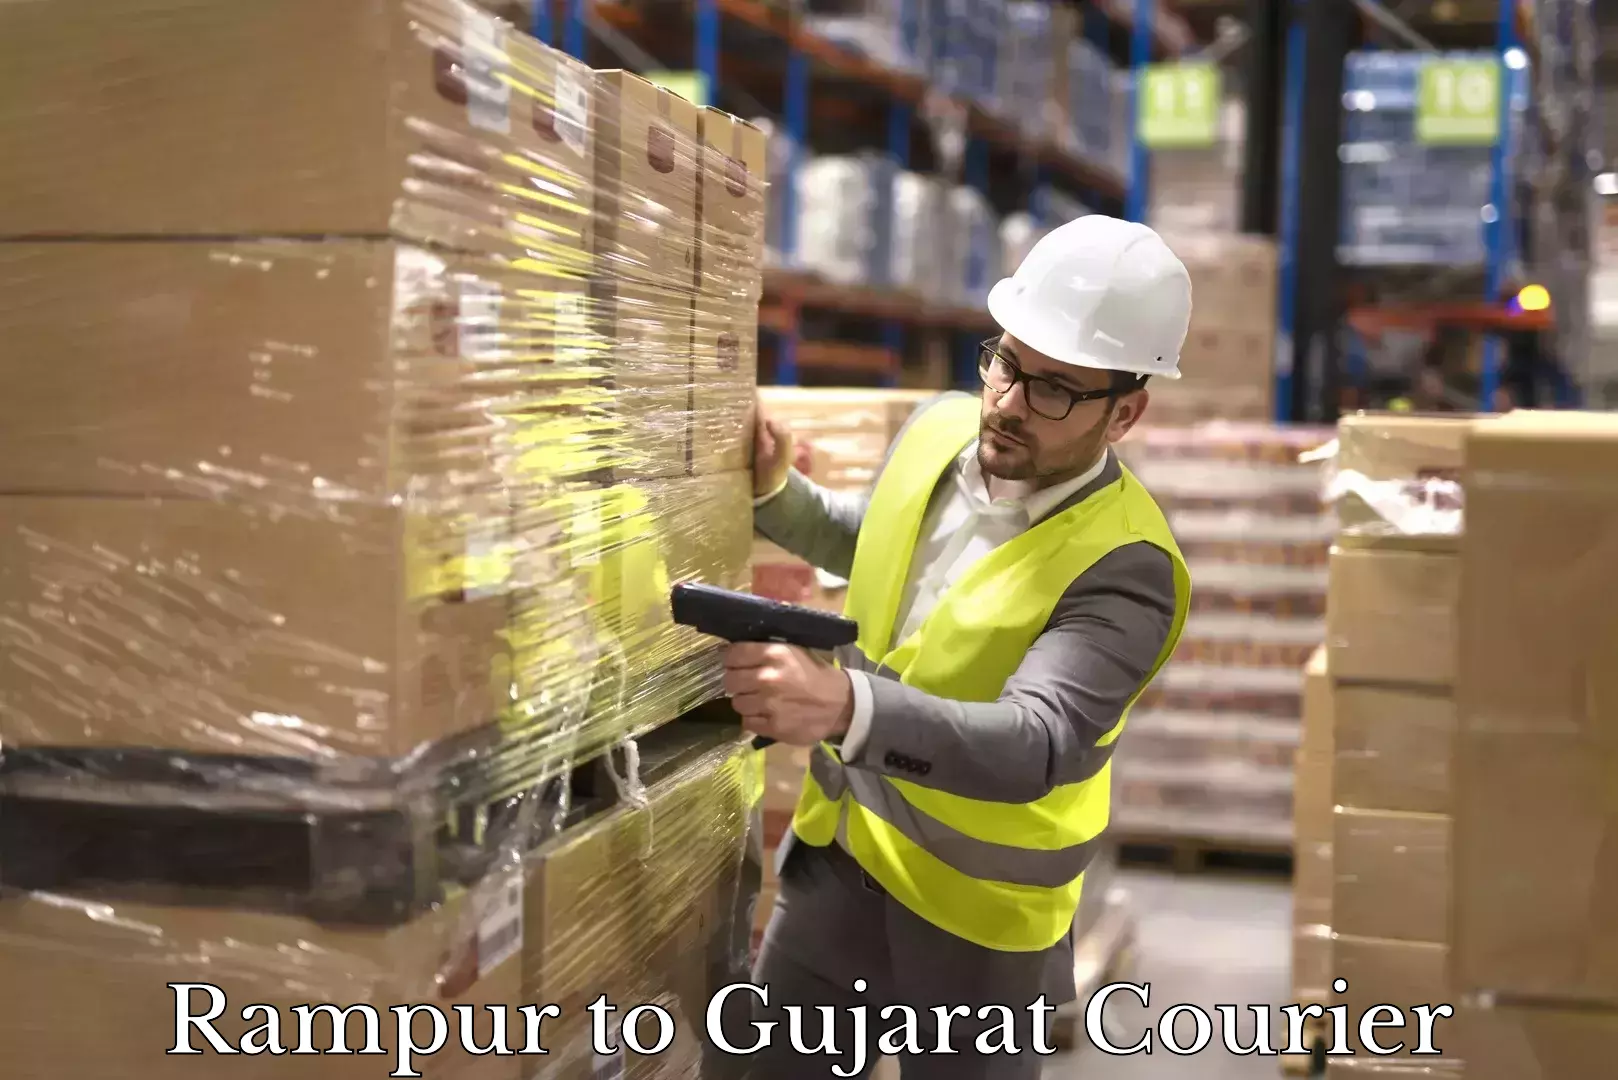 Courier service comparison Rampur to Gujarat